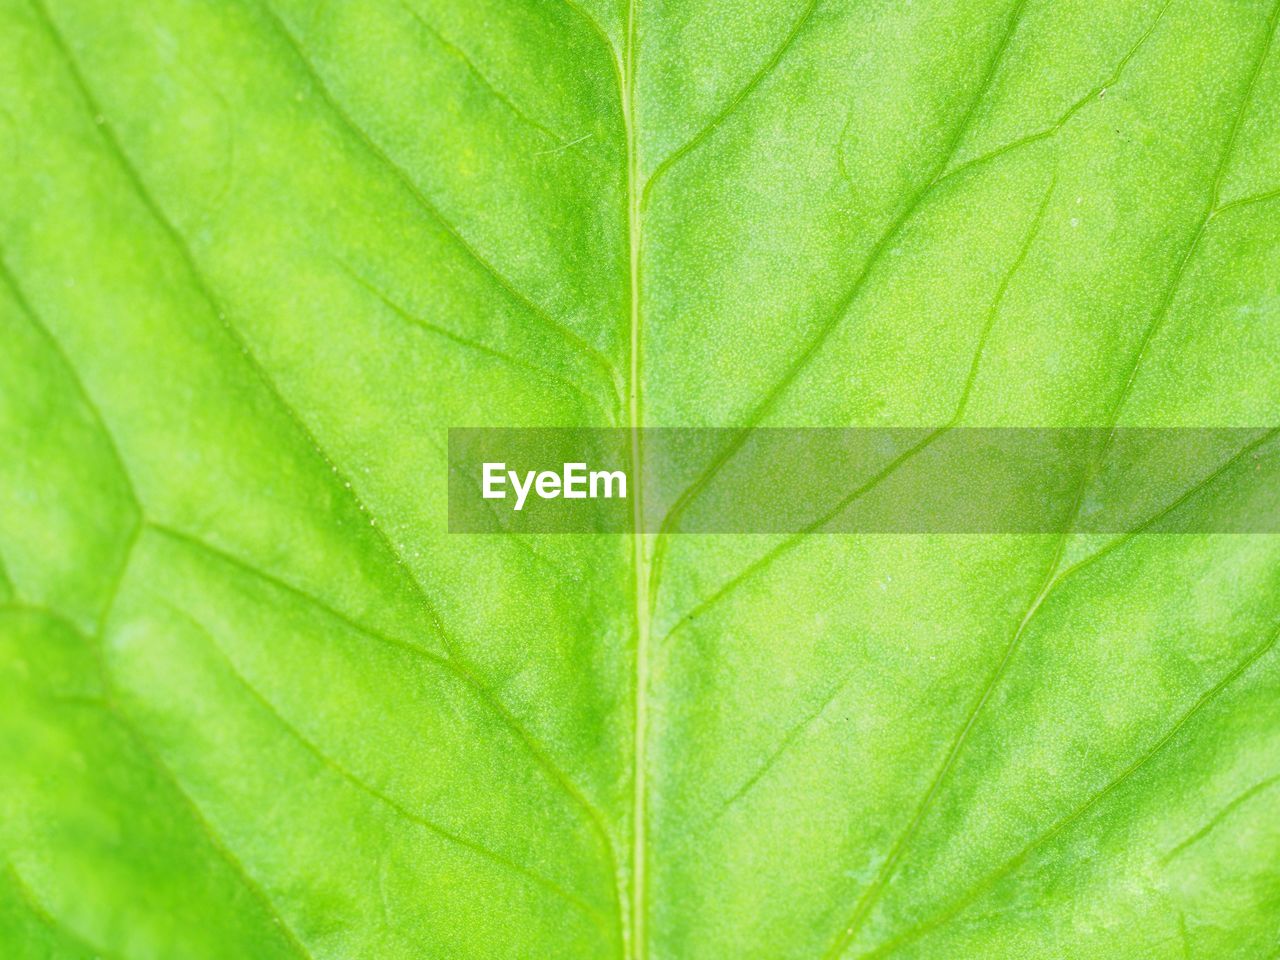 Green leaves full screen background